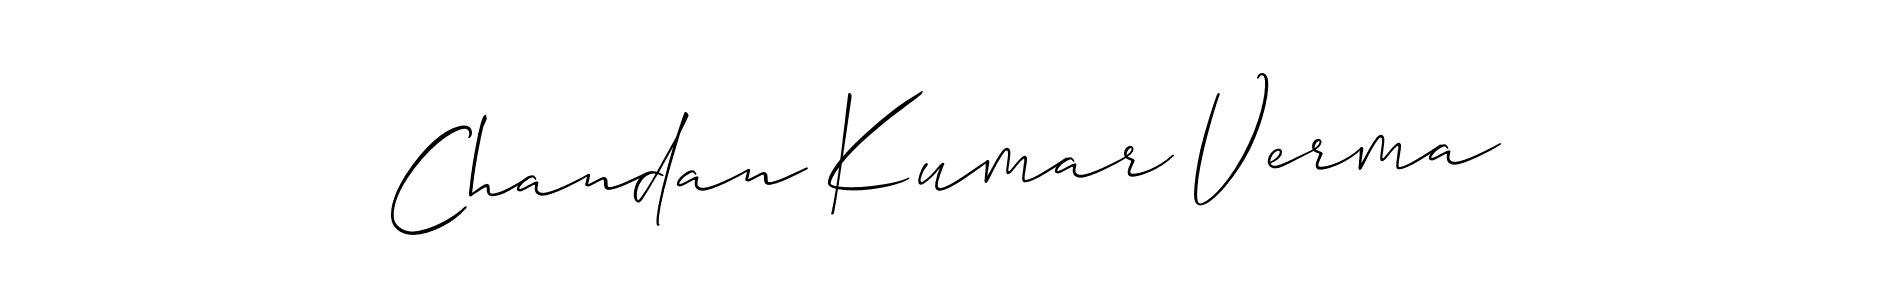 How to Draw Chandan Kumar Verma signature style? Allison_Script is a latest design signature styles for name Chandan Kumar Verma. Chandan Kumar Verma signature style 2 images and pictures png